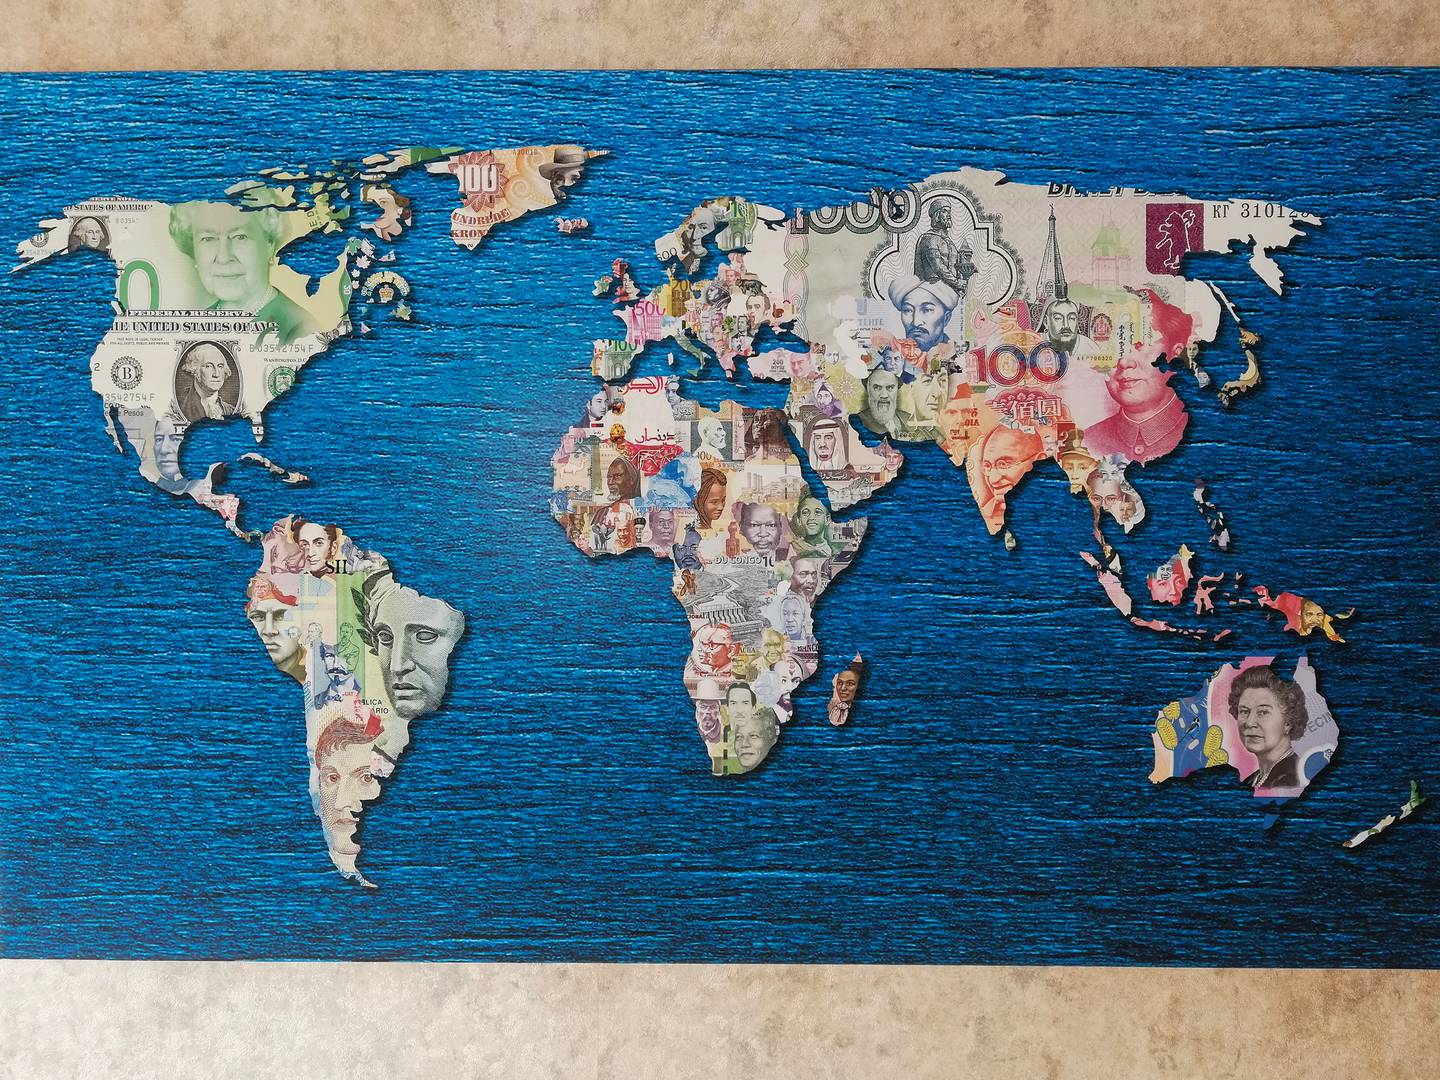 Monedas, extranjero. Foto: Shutterstock.